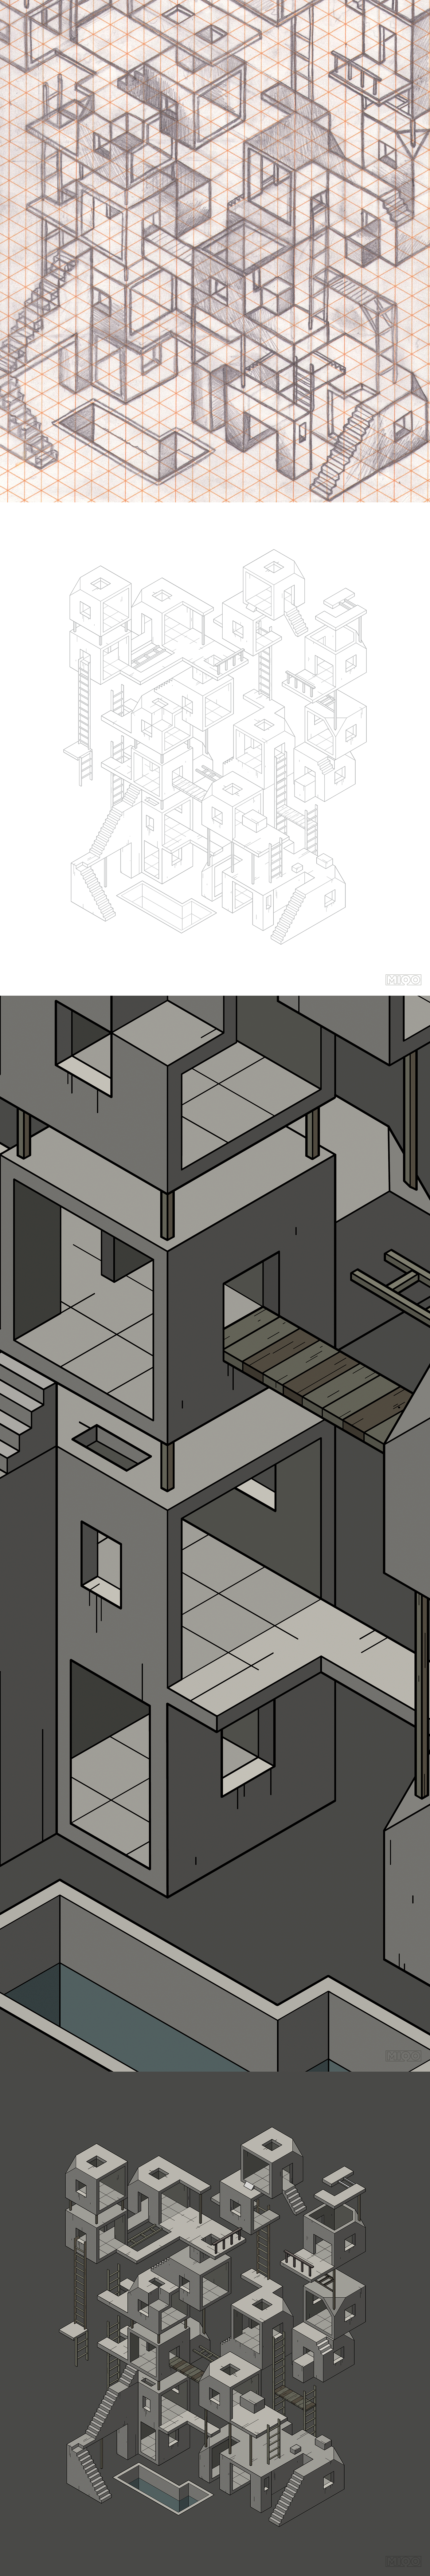 city block grey dark Isometric disseny metaphor construction barcelona